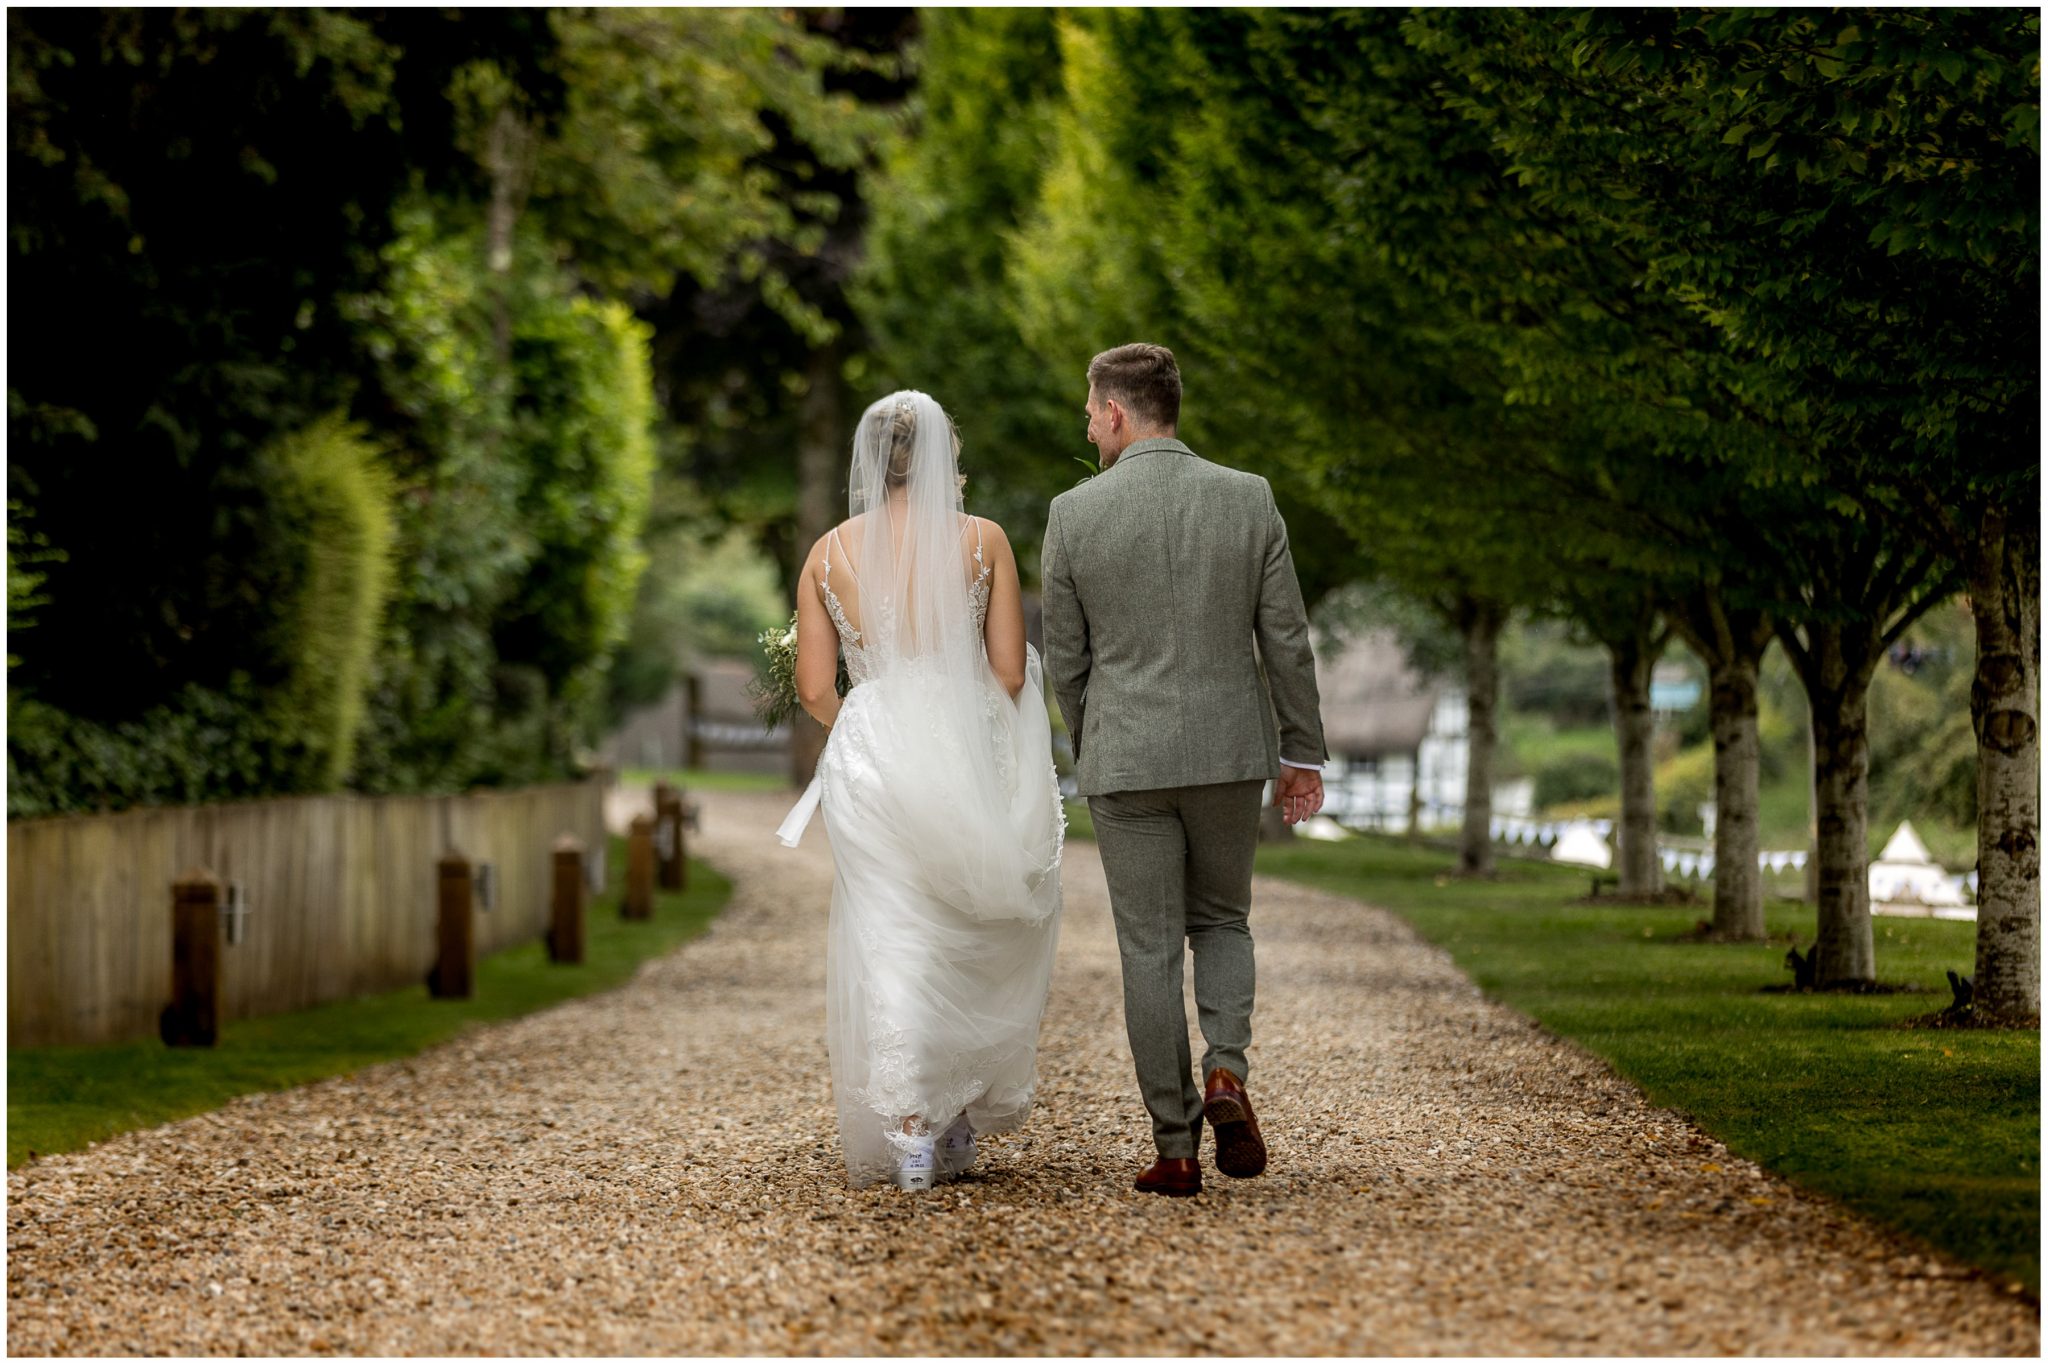 The bride and groom walk towards their wedding reception